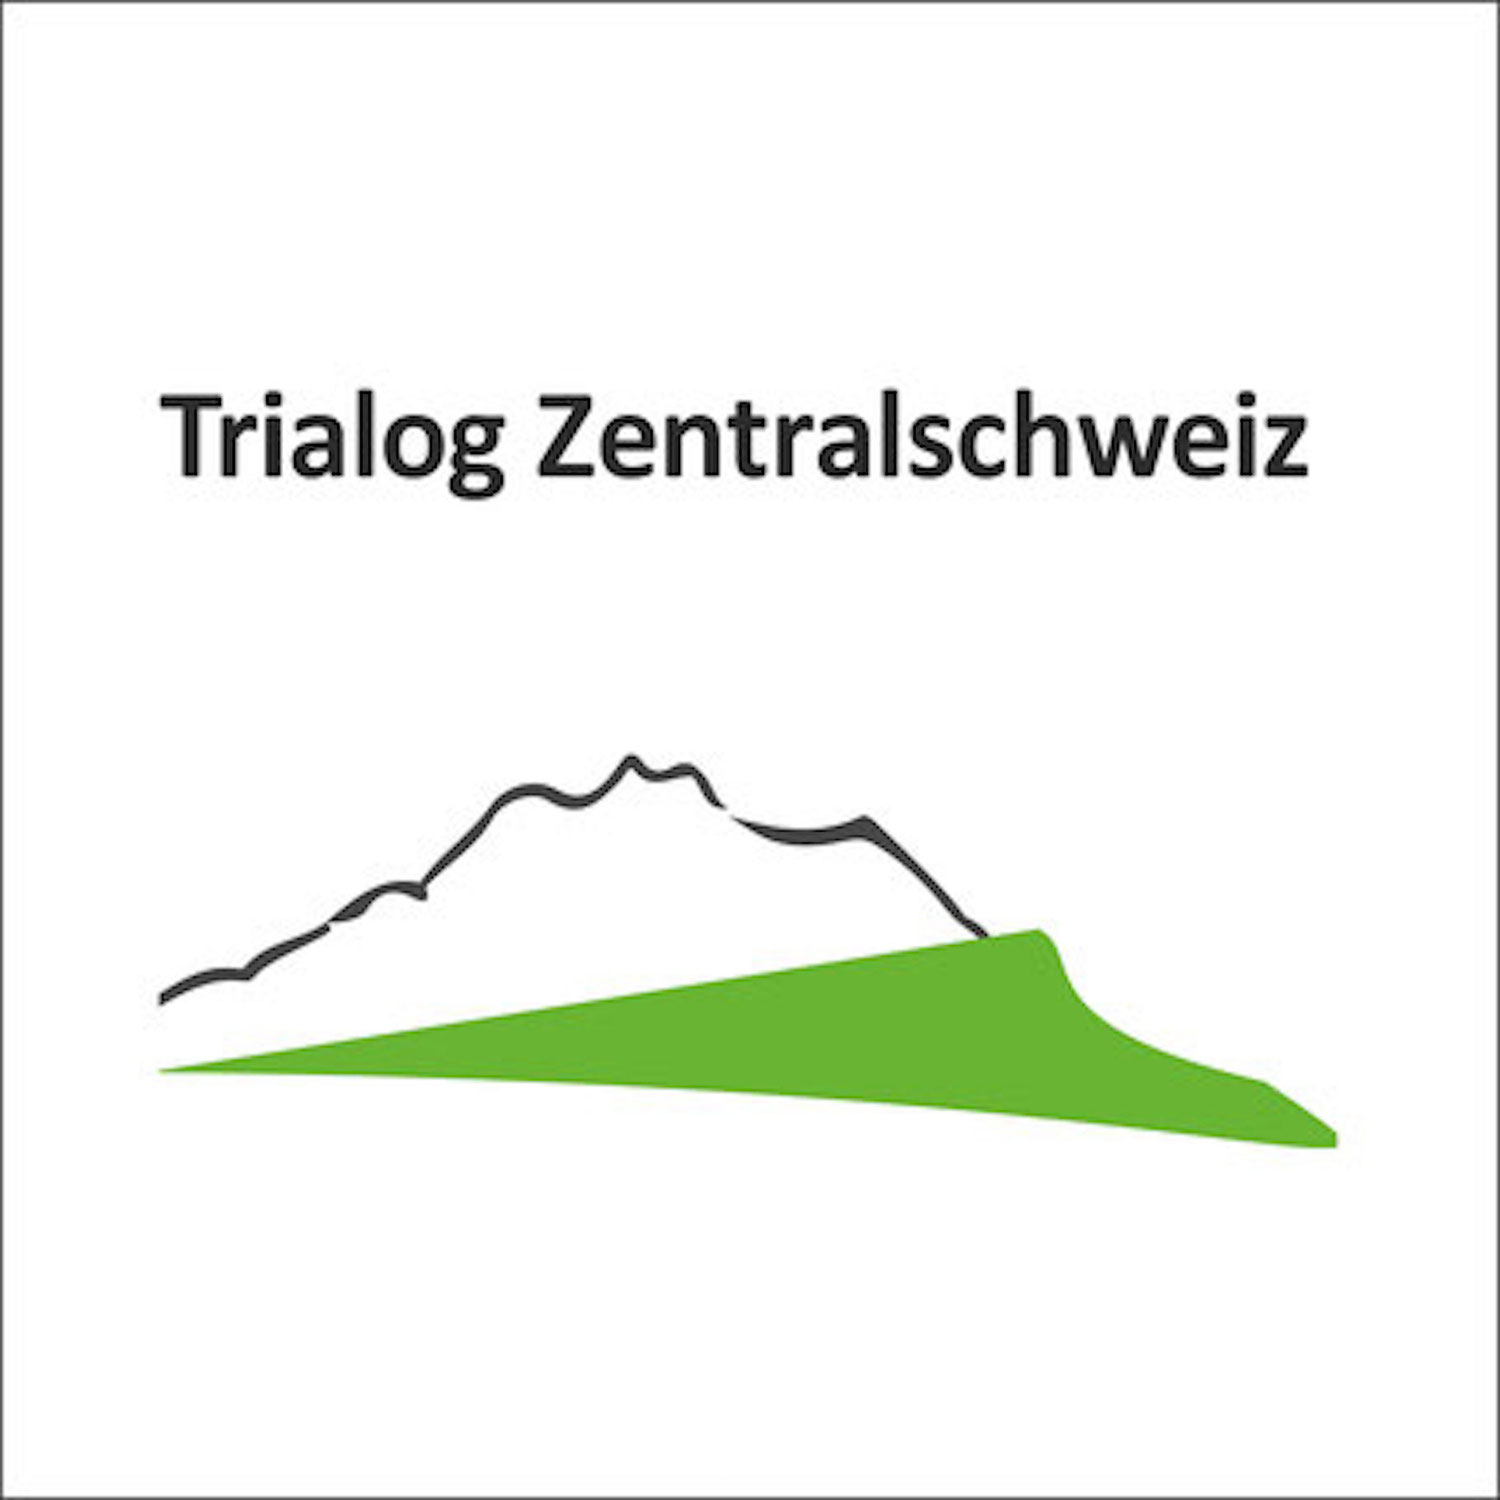 Trialog Zentralschweiz